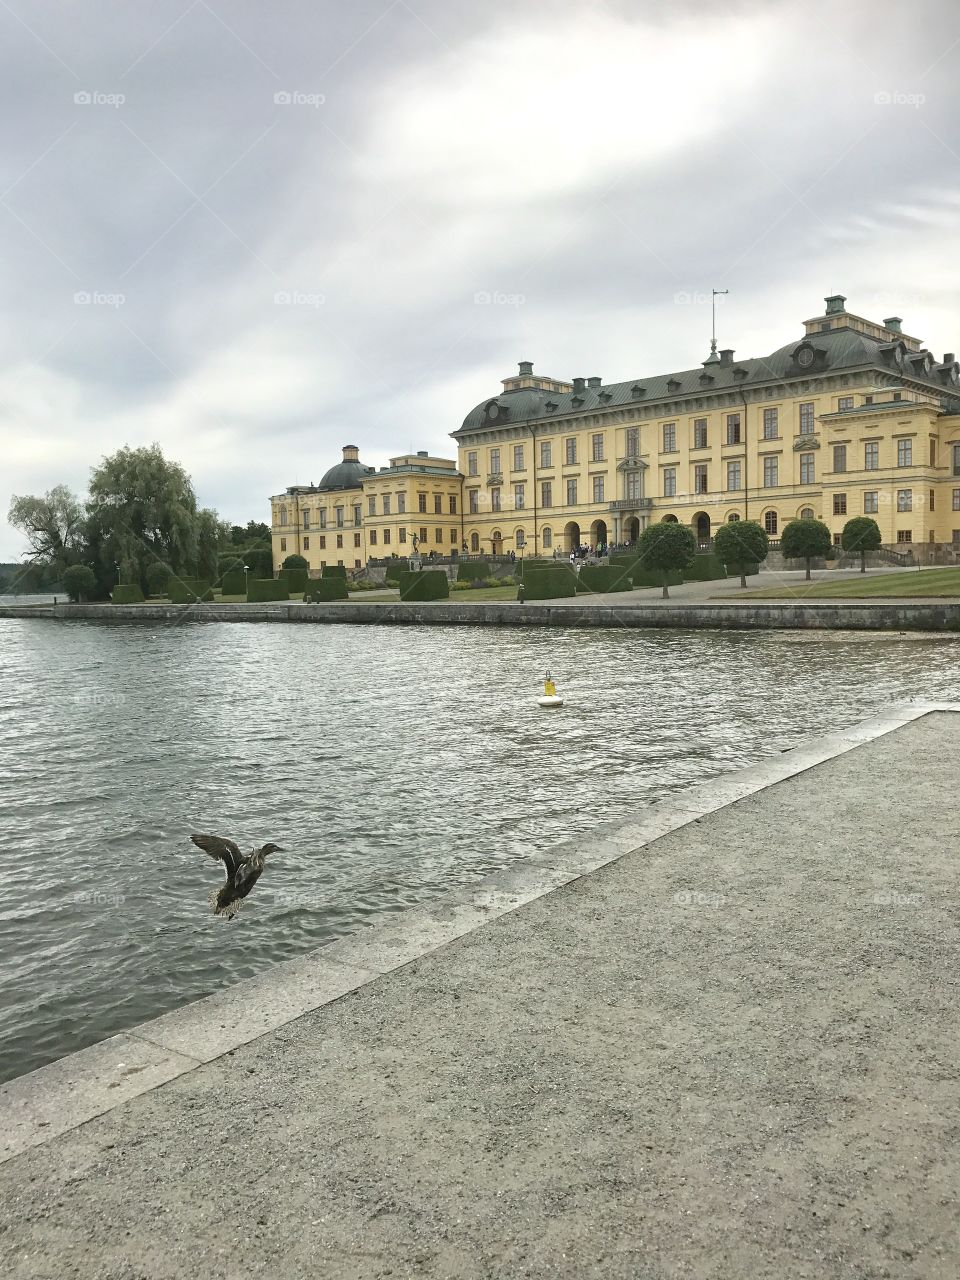 Drottningholm castle bird